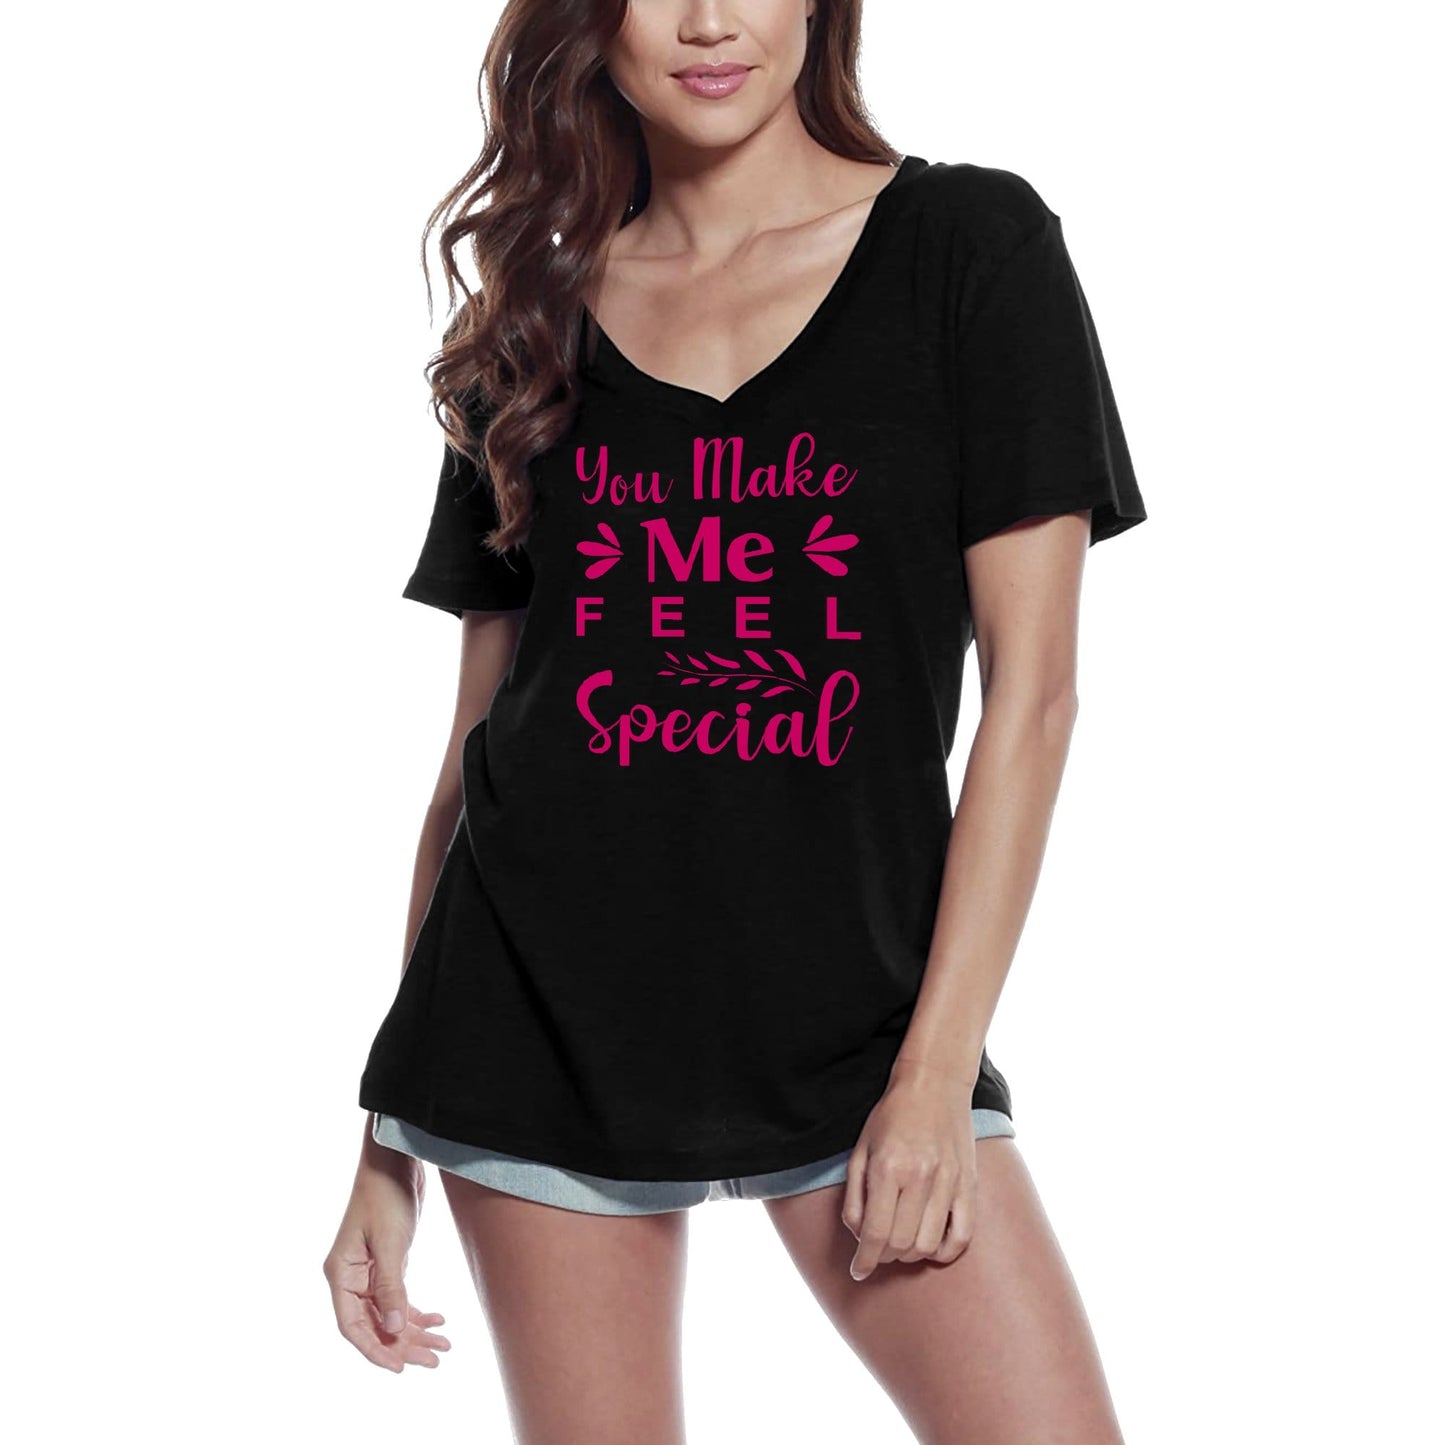 ULTRABASIC Women's T-Shirt You Make Me Feel Special - Short Sleeve Tee Shirt Gift Tops